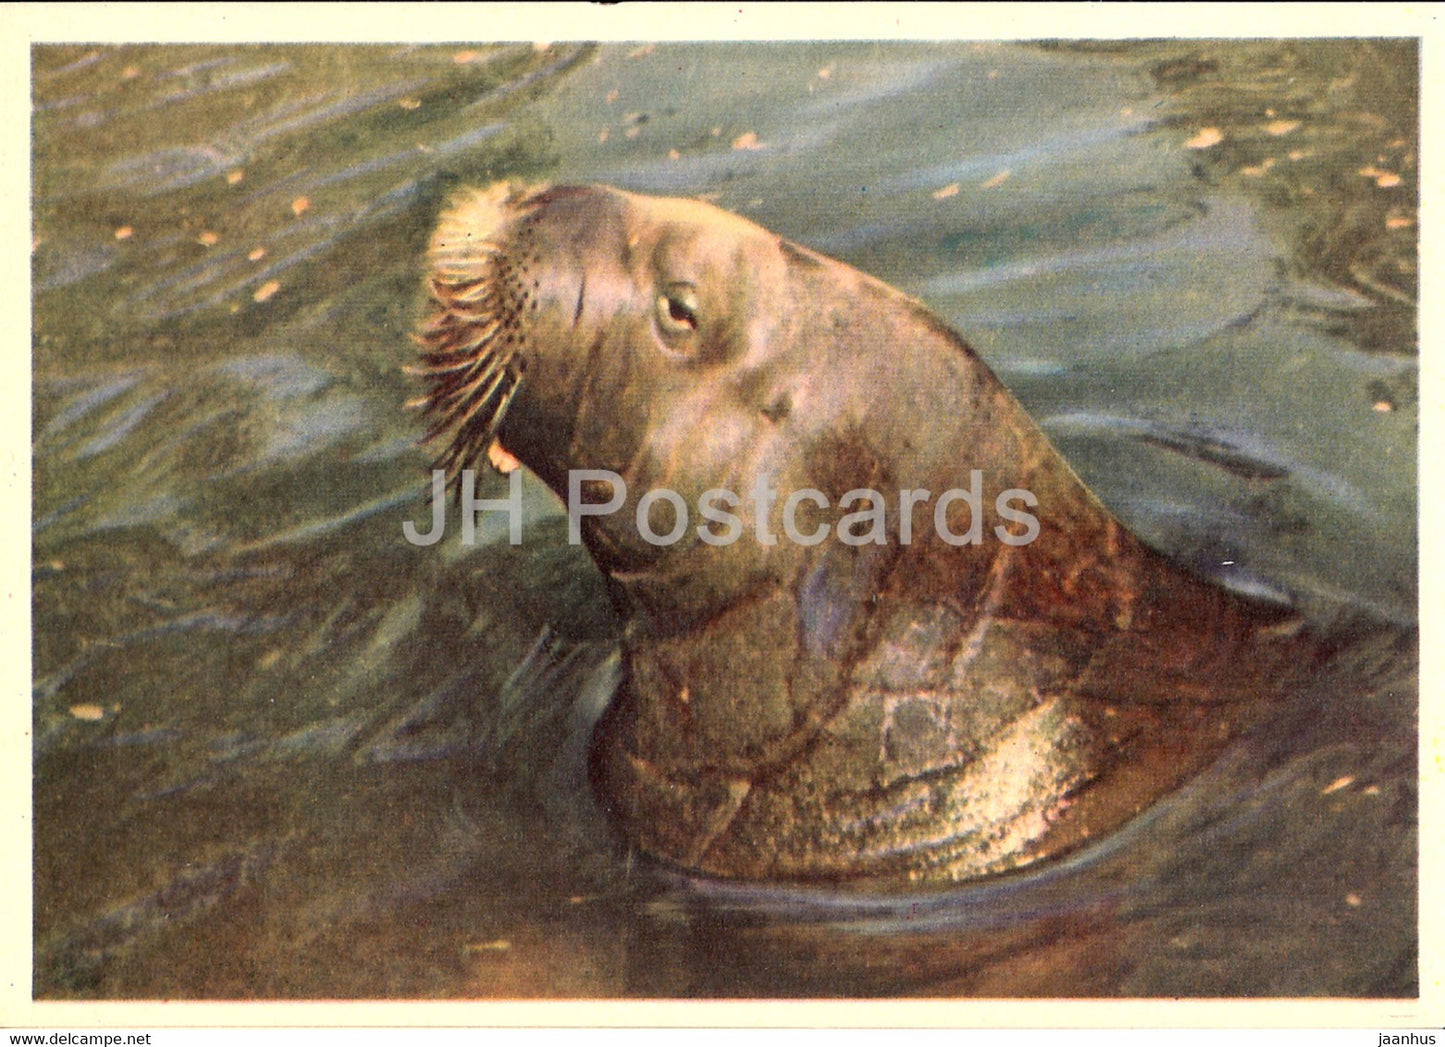 Walrus - Odobenus rosmarus - Moscow Zoo - 1963 - Russia USSR - unused - JH Postcards